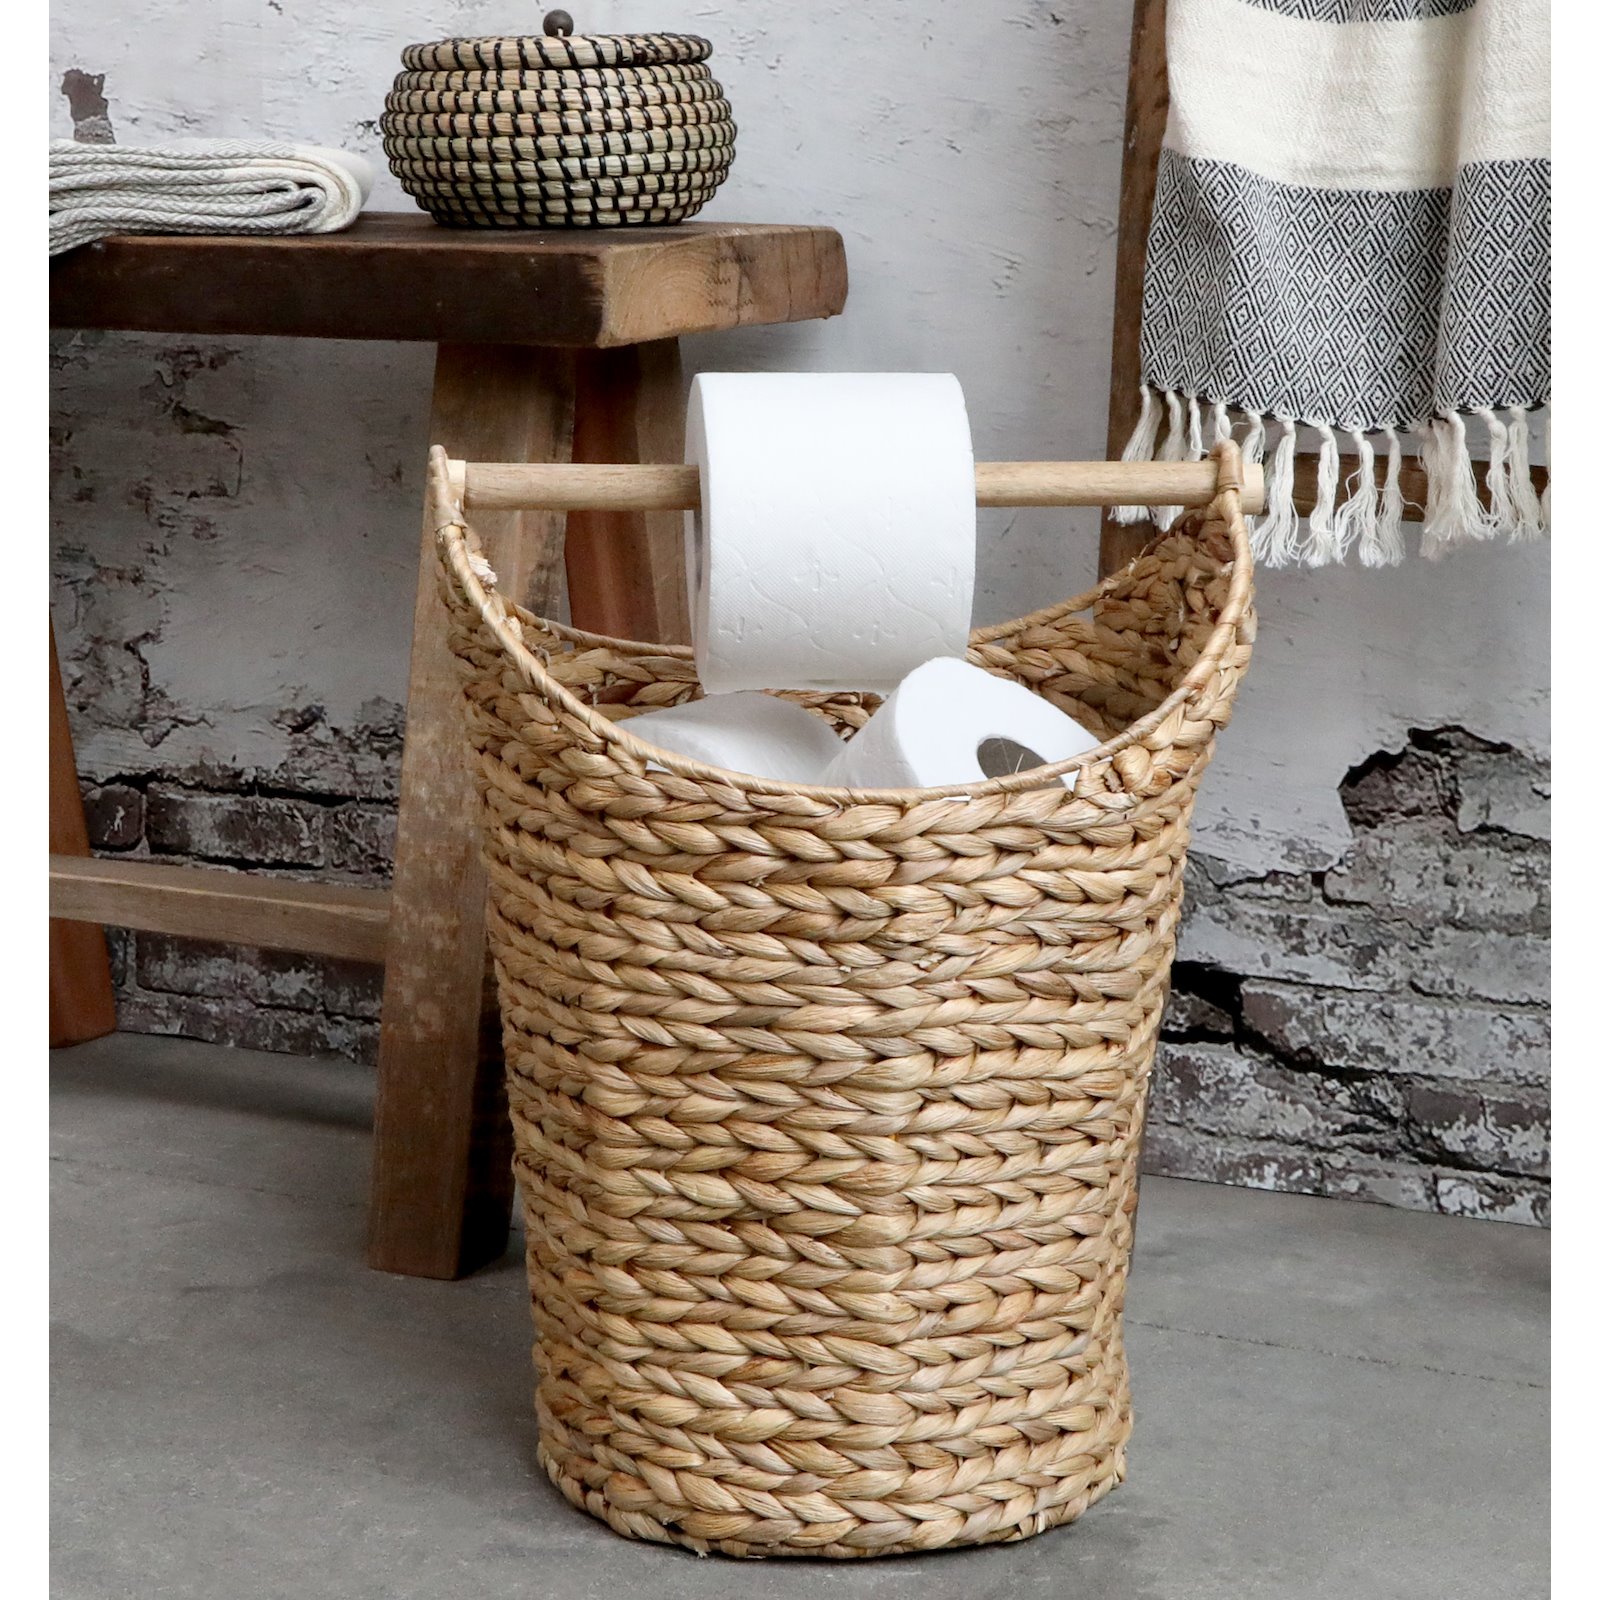 Basket with Toilet Roll holder - Natural Image